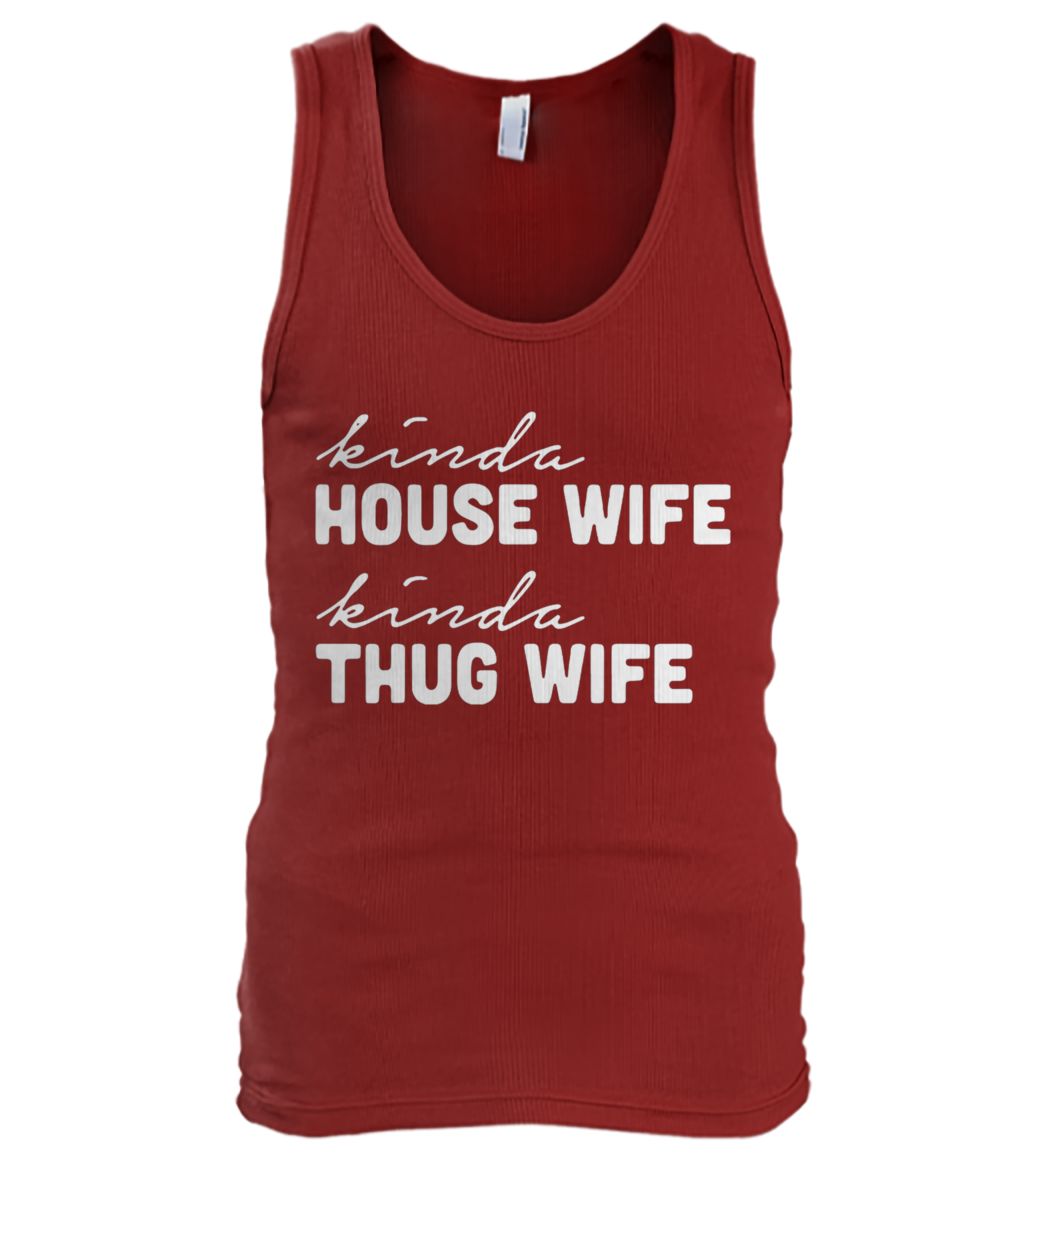 Kinda house wife kinda thug wife men's tank top